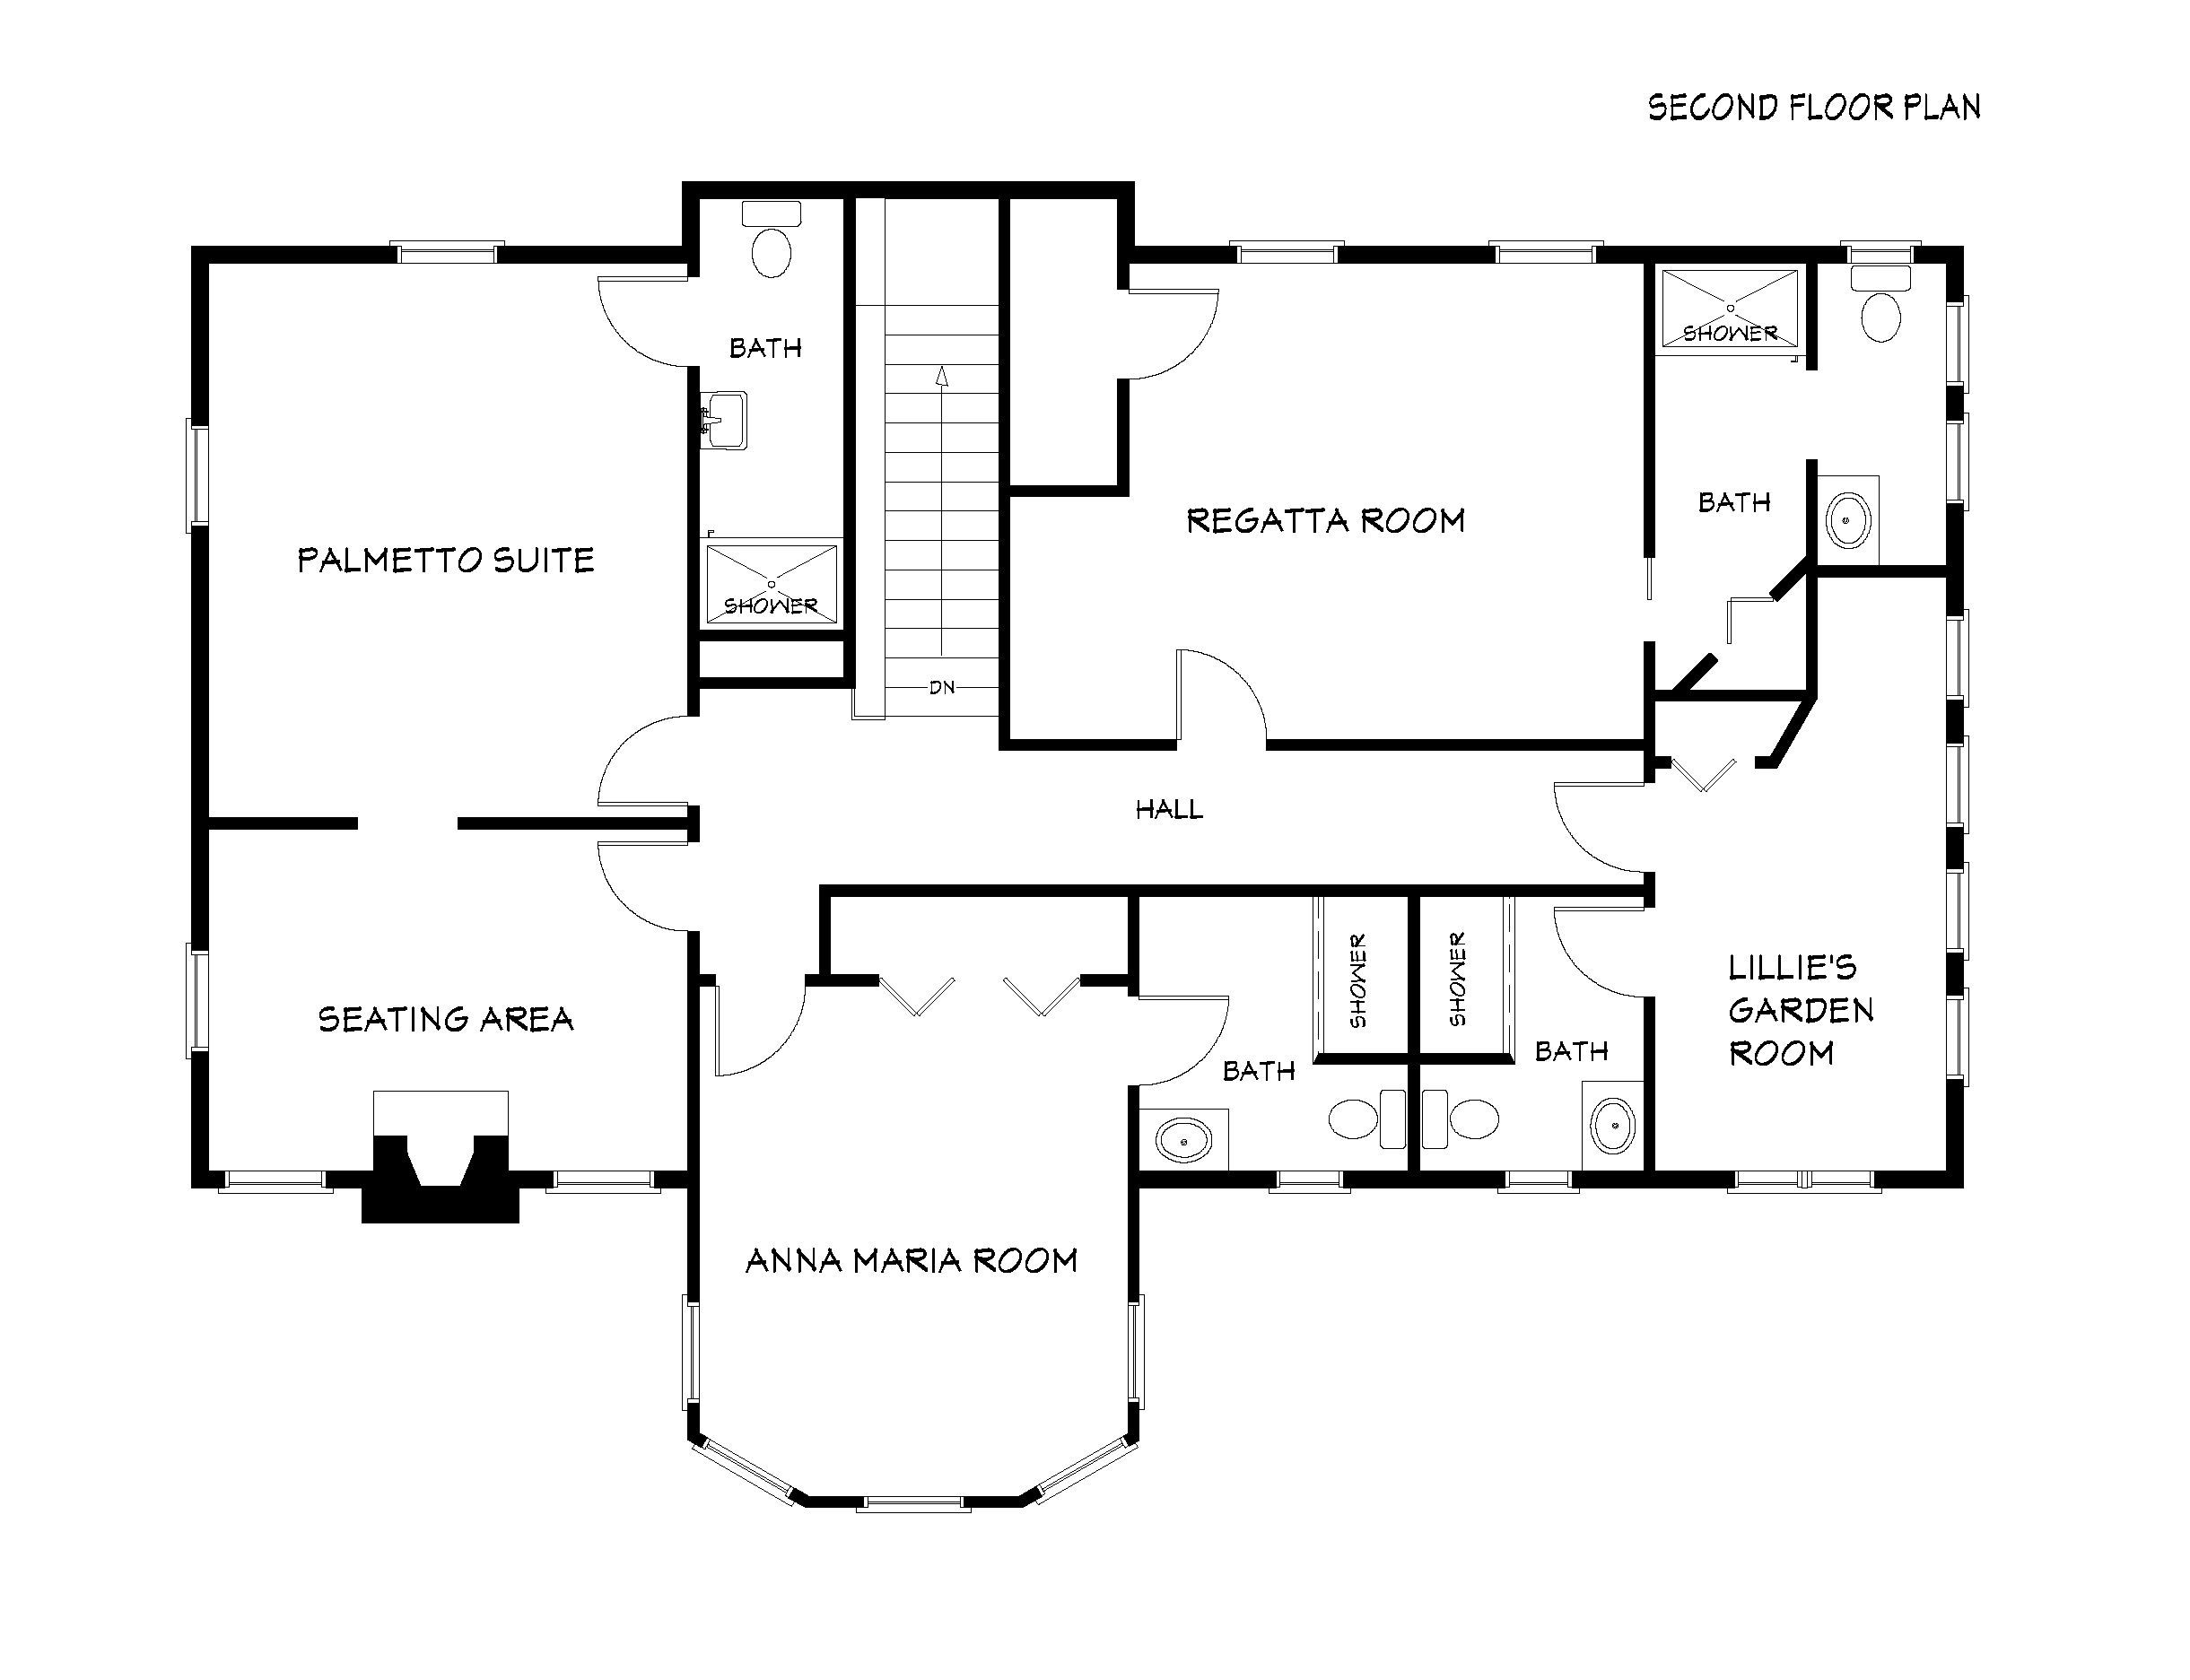 Palmetto Riverside Floorplan - Second Floor